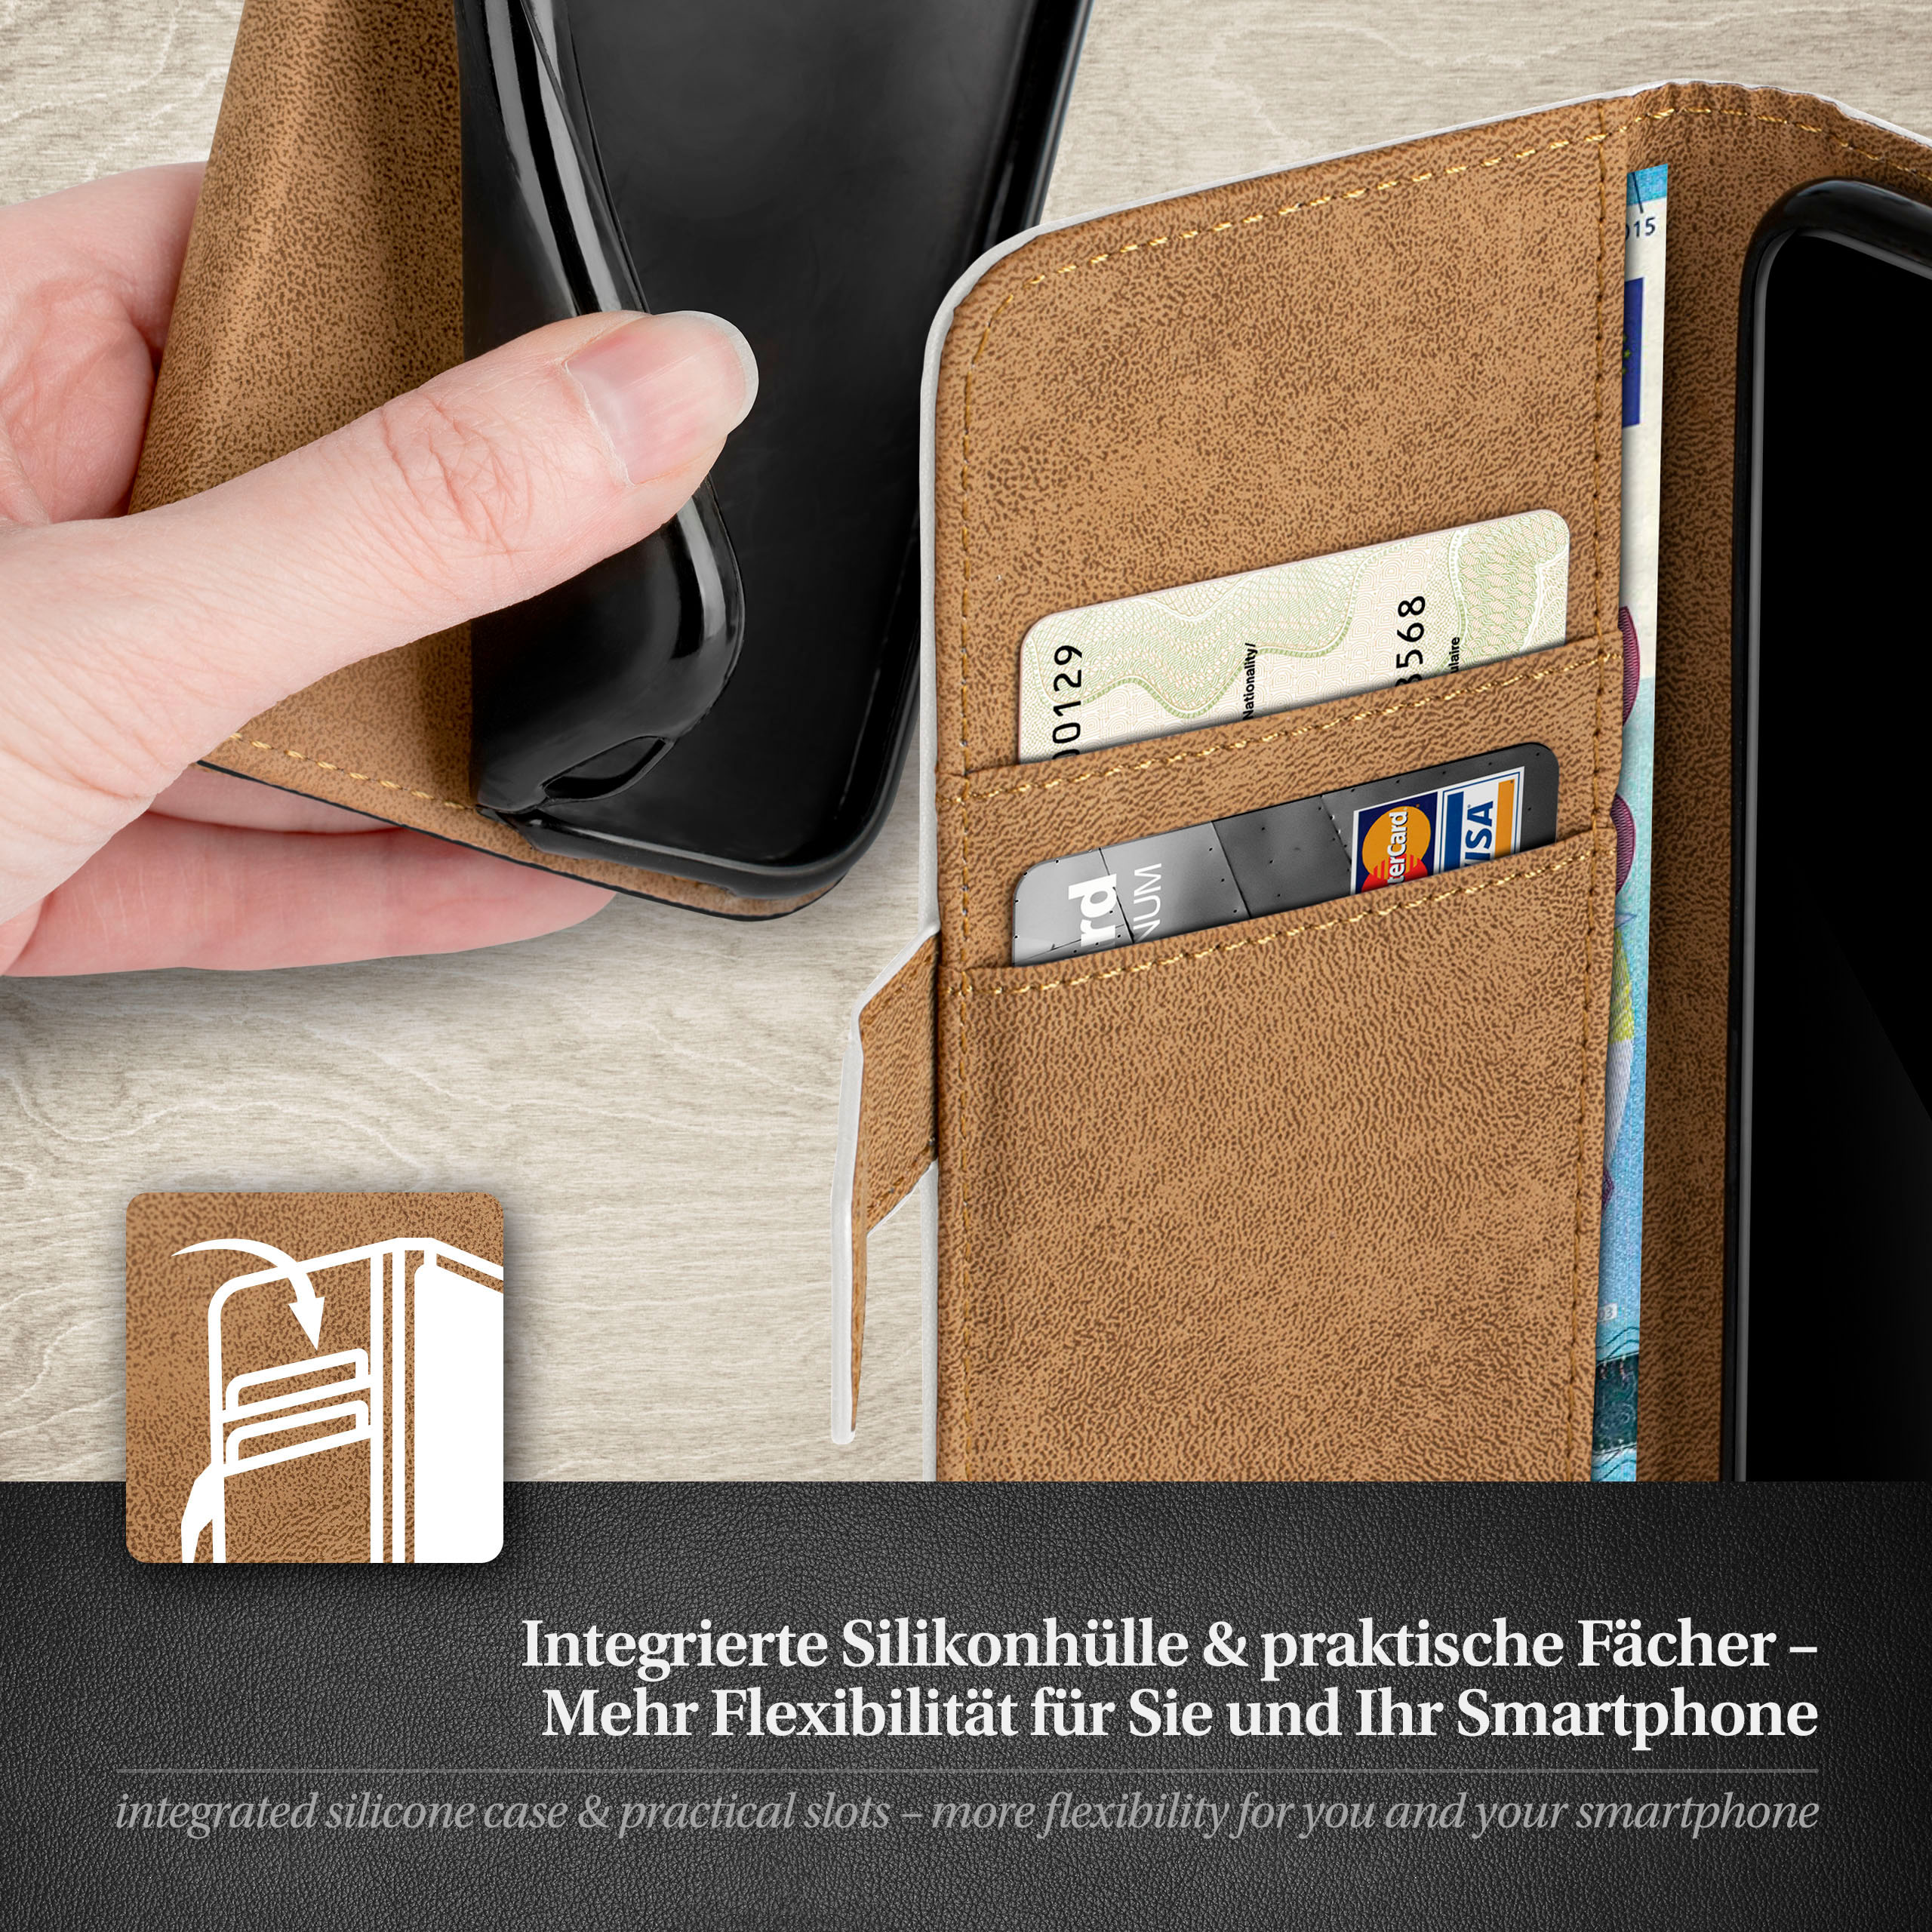 Plus, Bookcover, Book MOEX Pearl-White Samsung, S9 Galaxy Case,